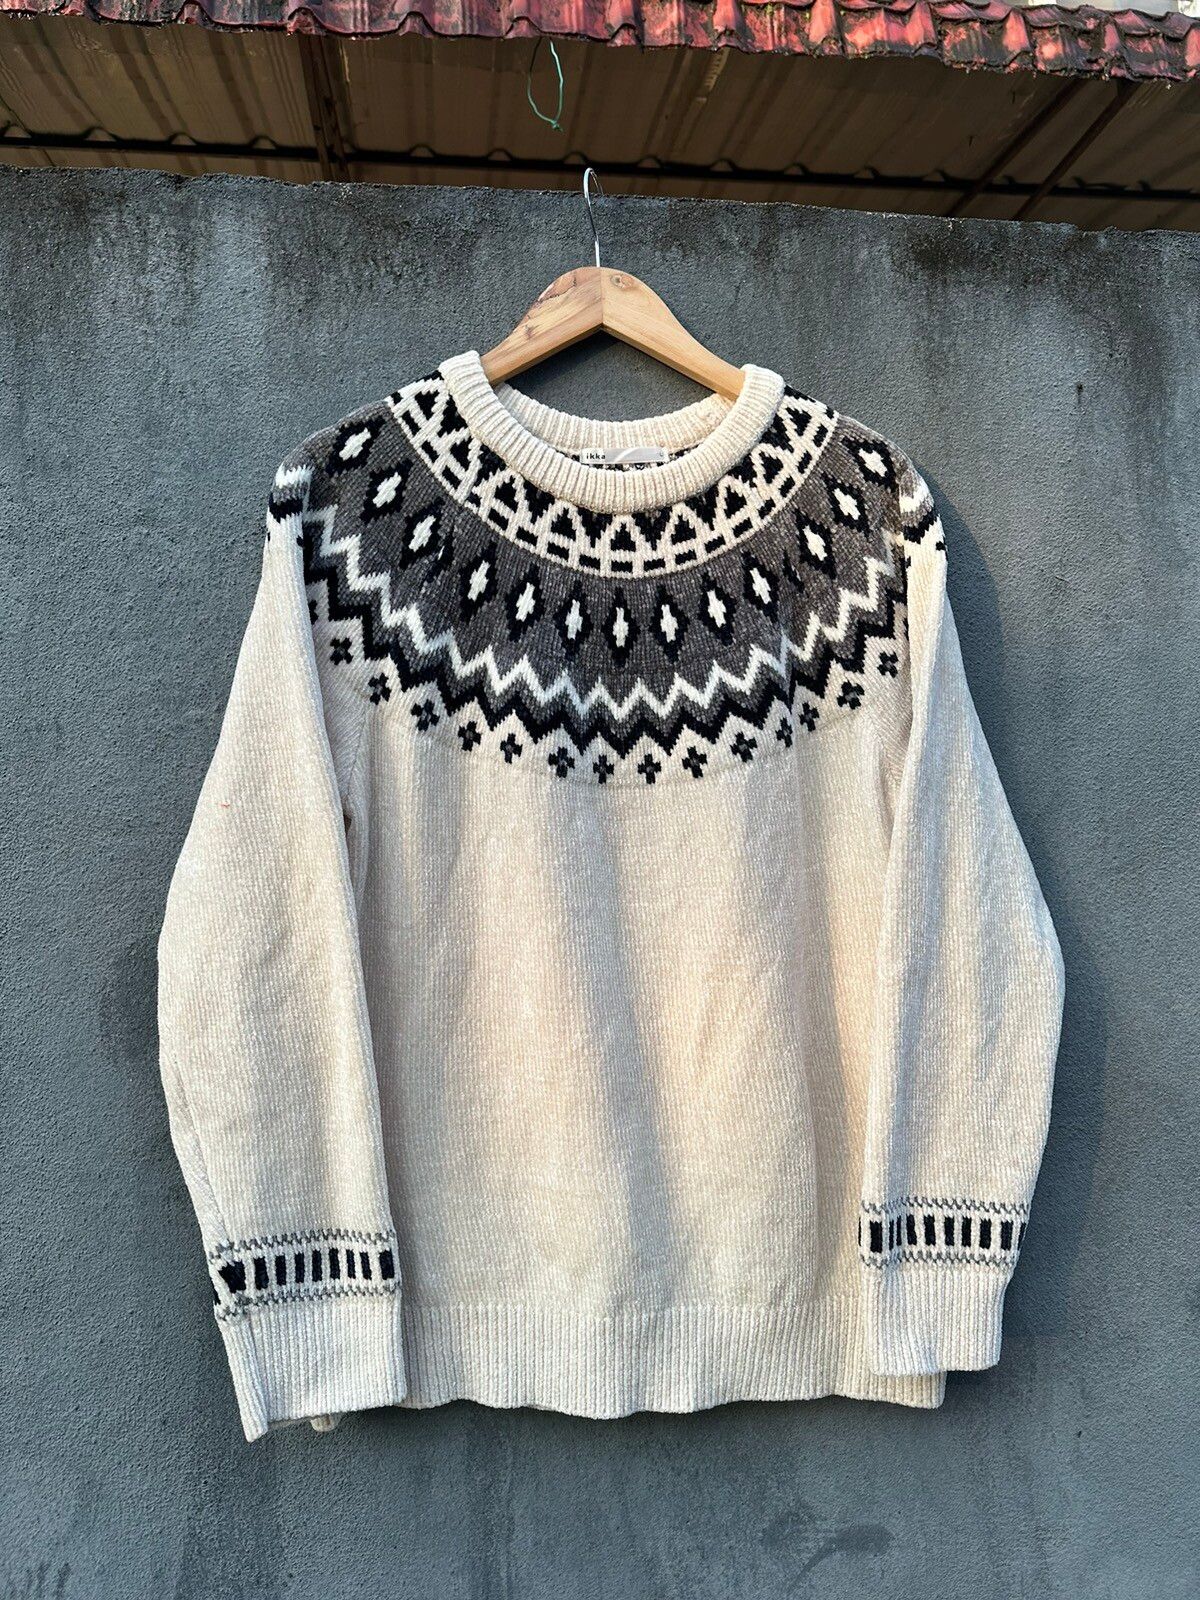 Japanese Brand Ikka Knitted Sweatshirt Size US M / EU 48-50 / 2 - 4 Thumbnail